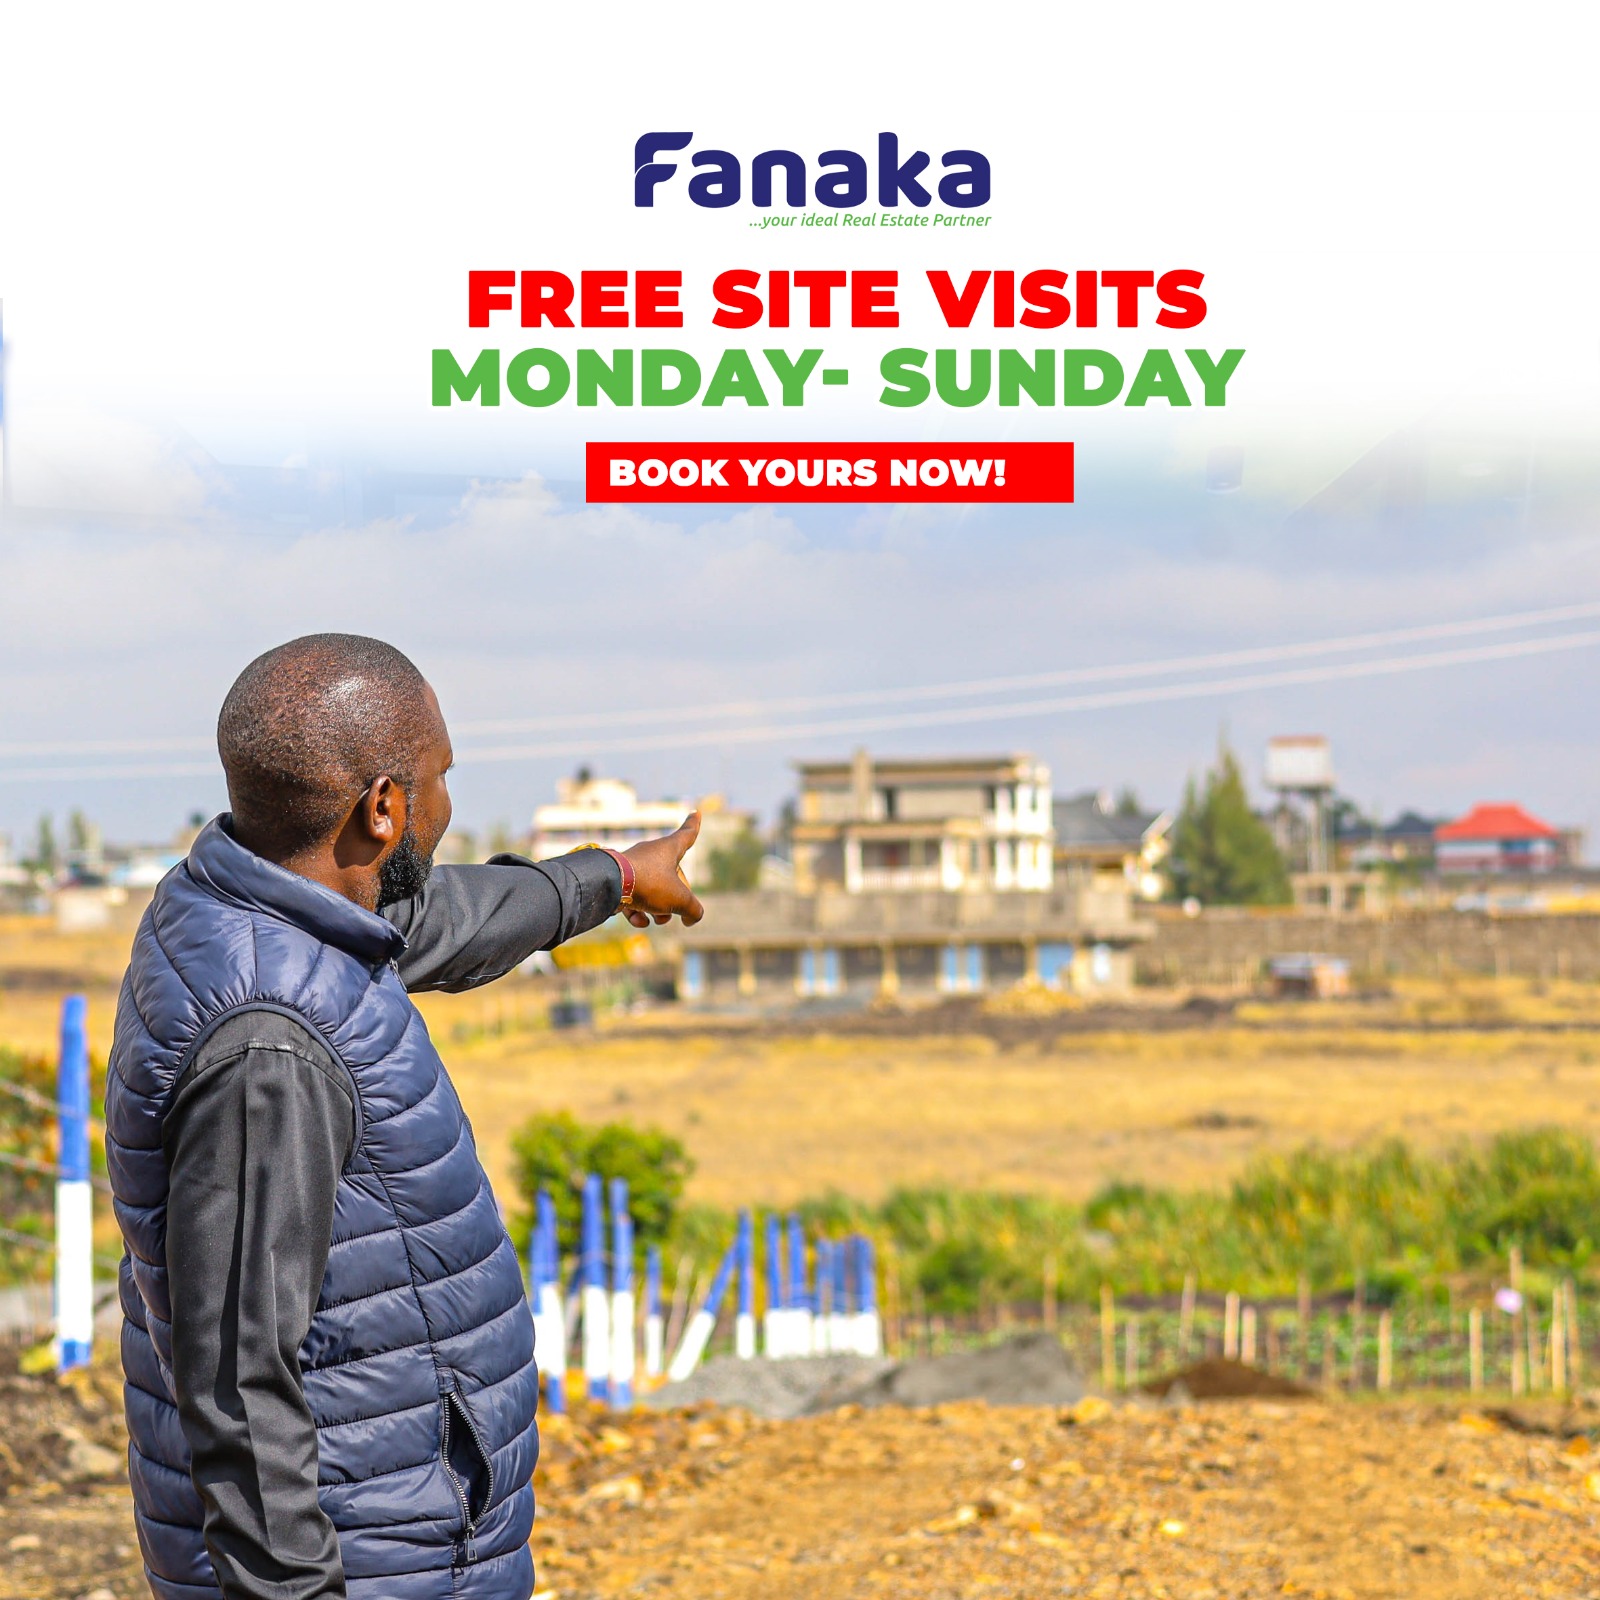 Why Fanaka real estate